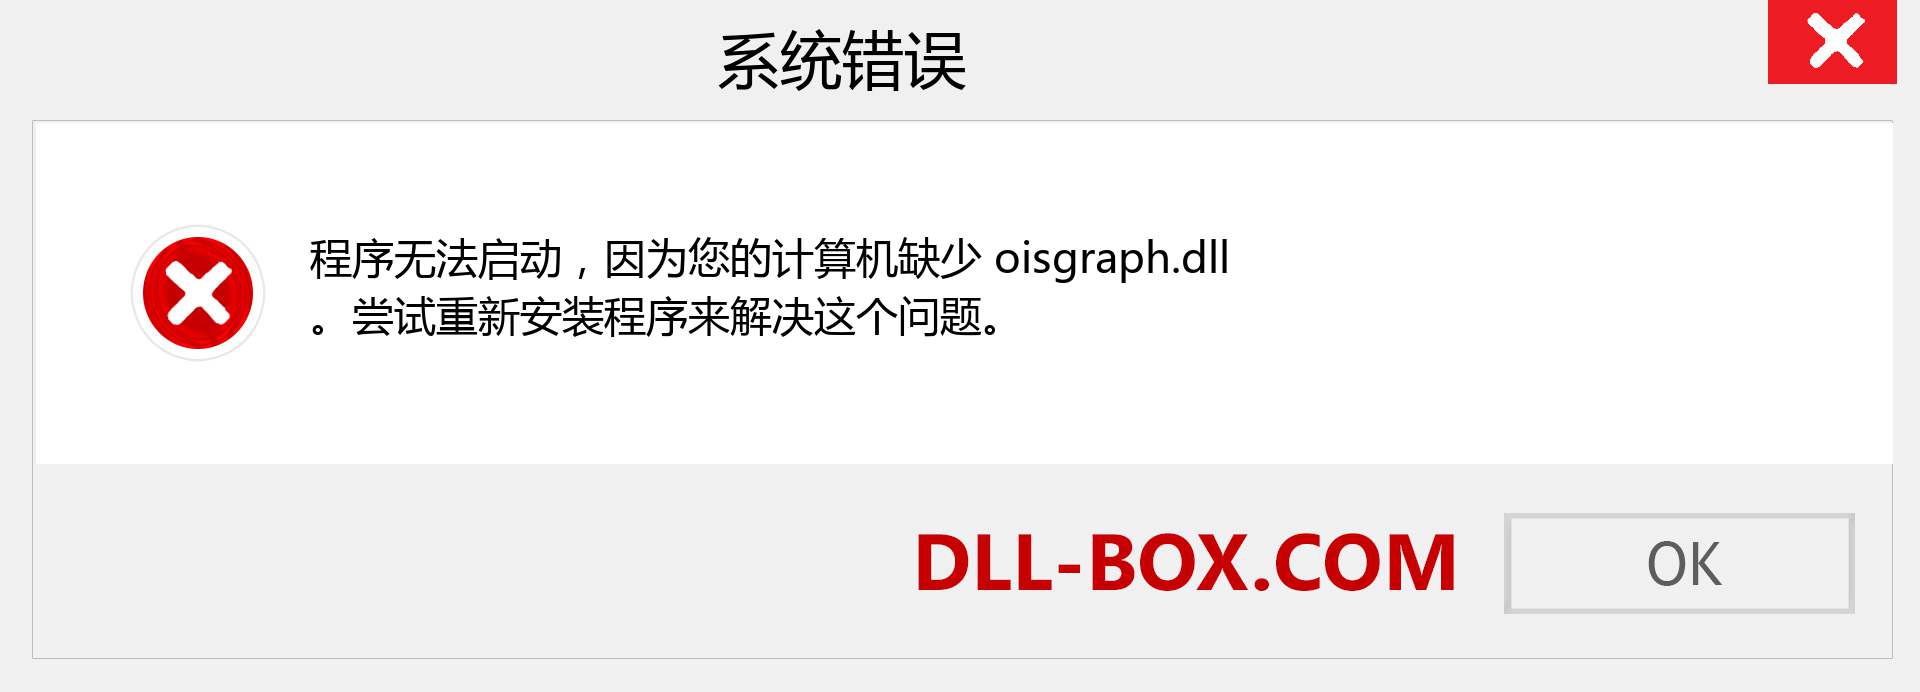 oisgraph.dll 文件丢失？。 适用于 Windows 7、8、10 的下载 - 修复 Windows、照片、图像上的 oisgraph dll 丢失错误